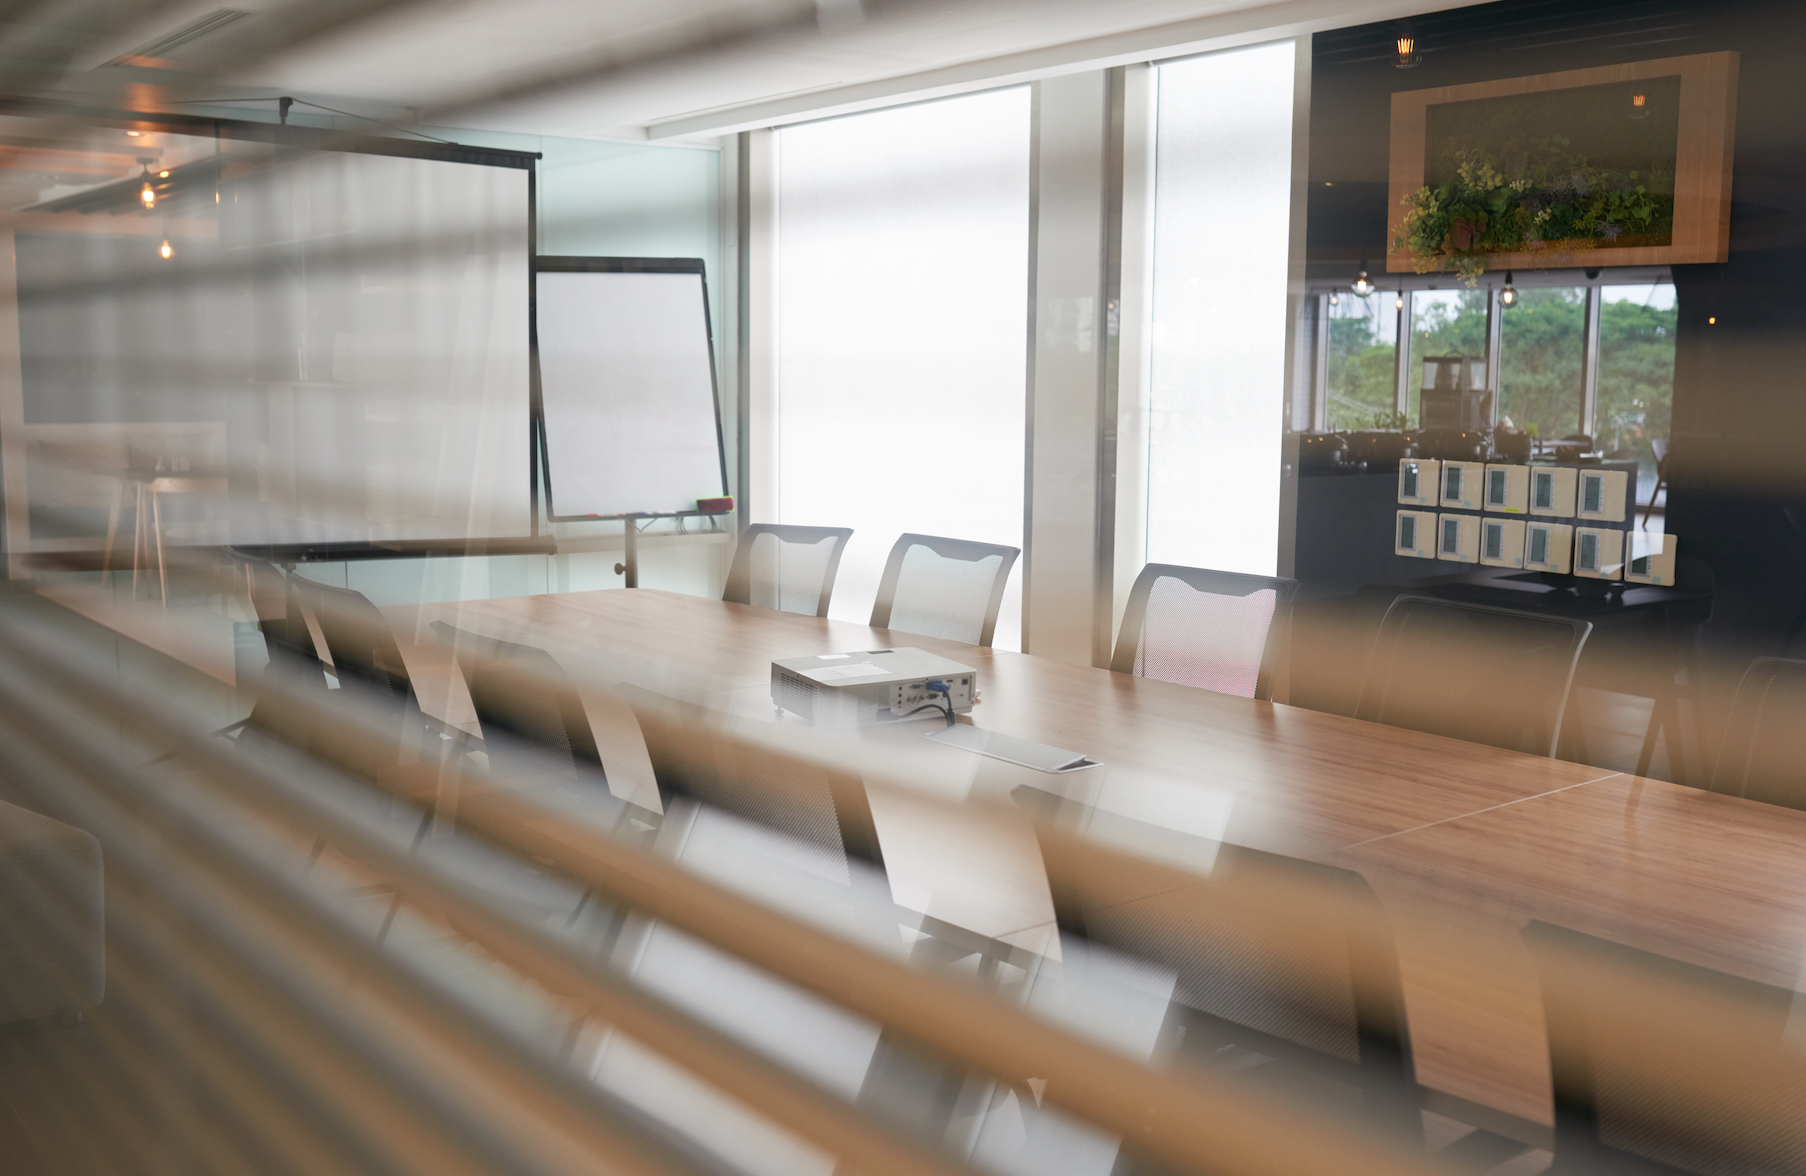 6 Meeting Room Essentials That Make Meetings More Successful